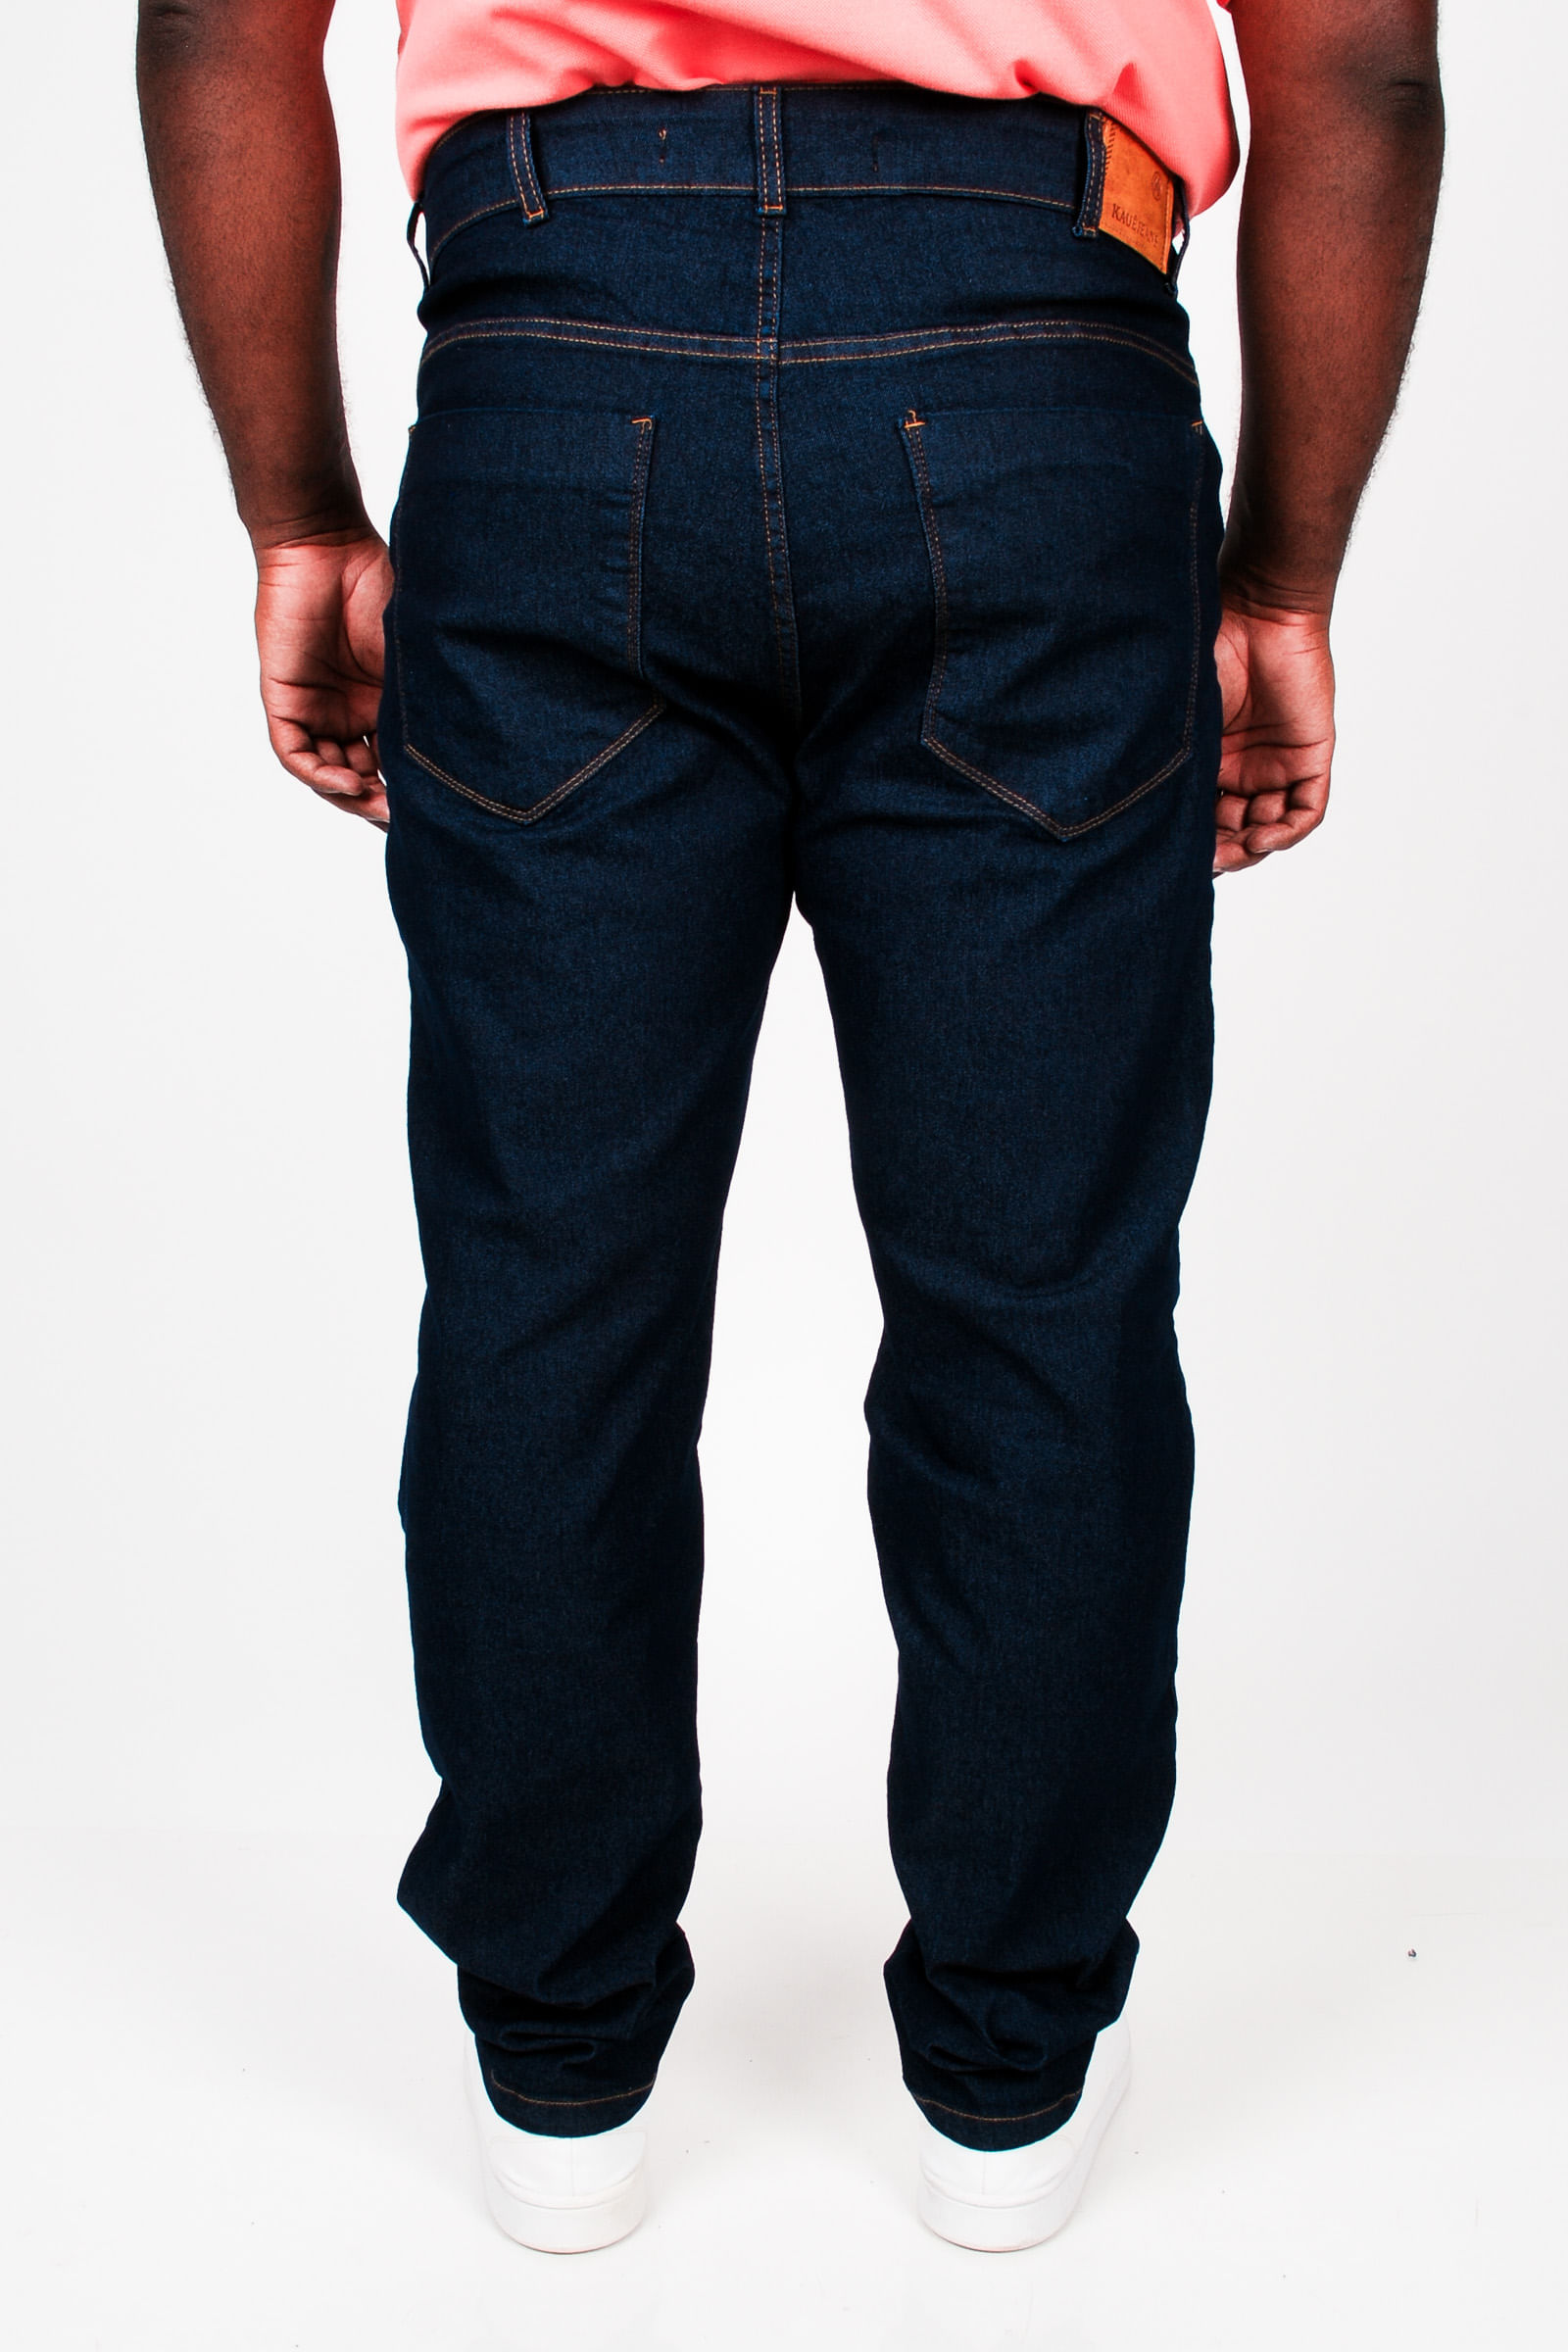 Calca-skinny-blue-jeans-plus-size_0102_4